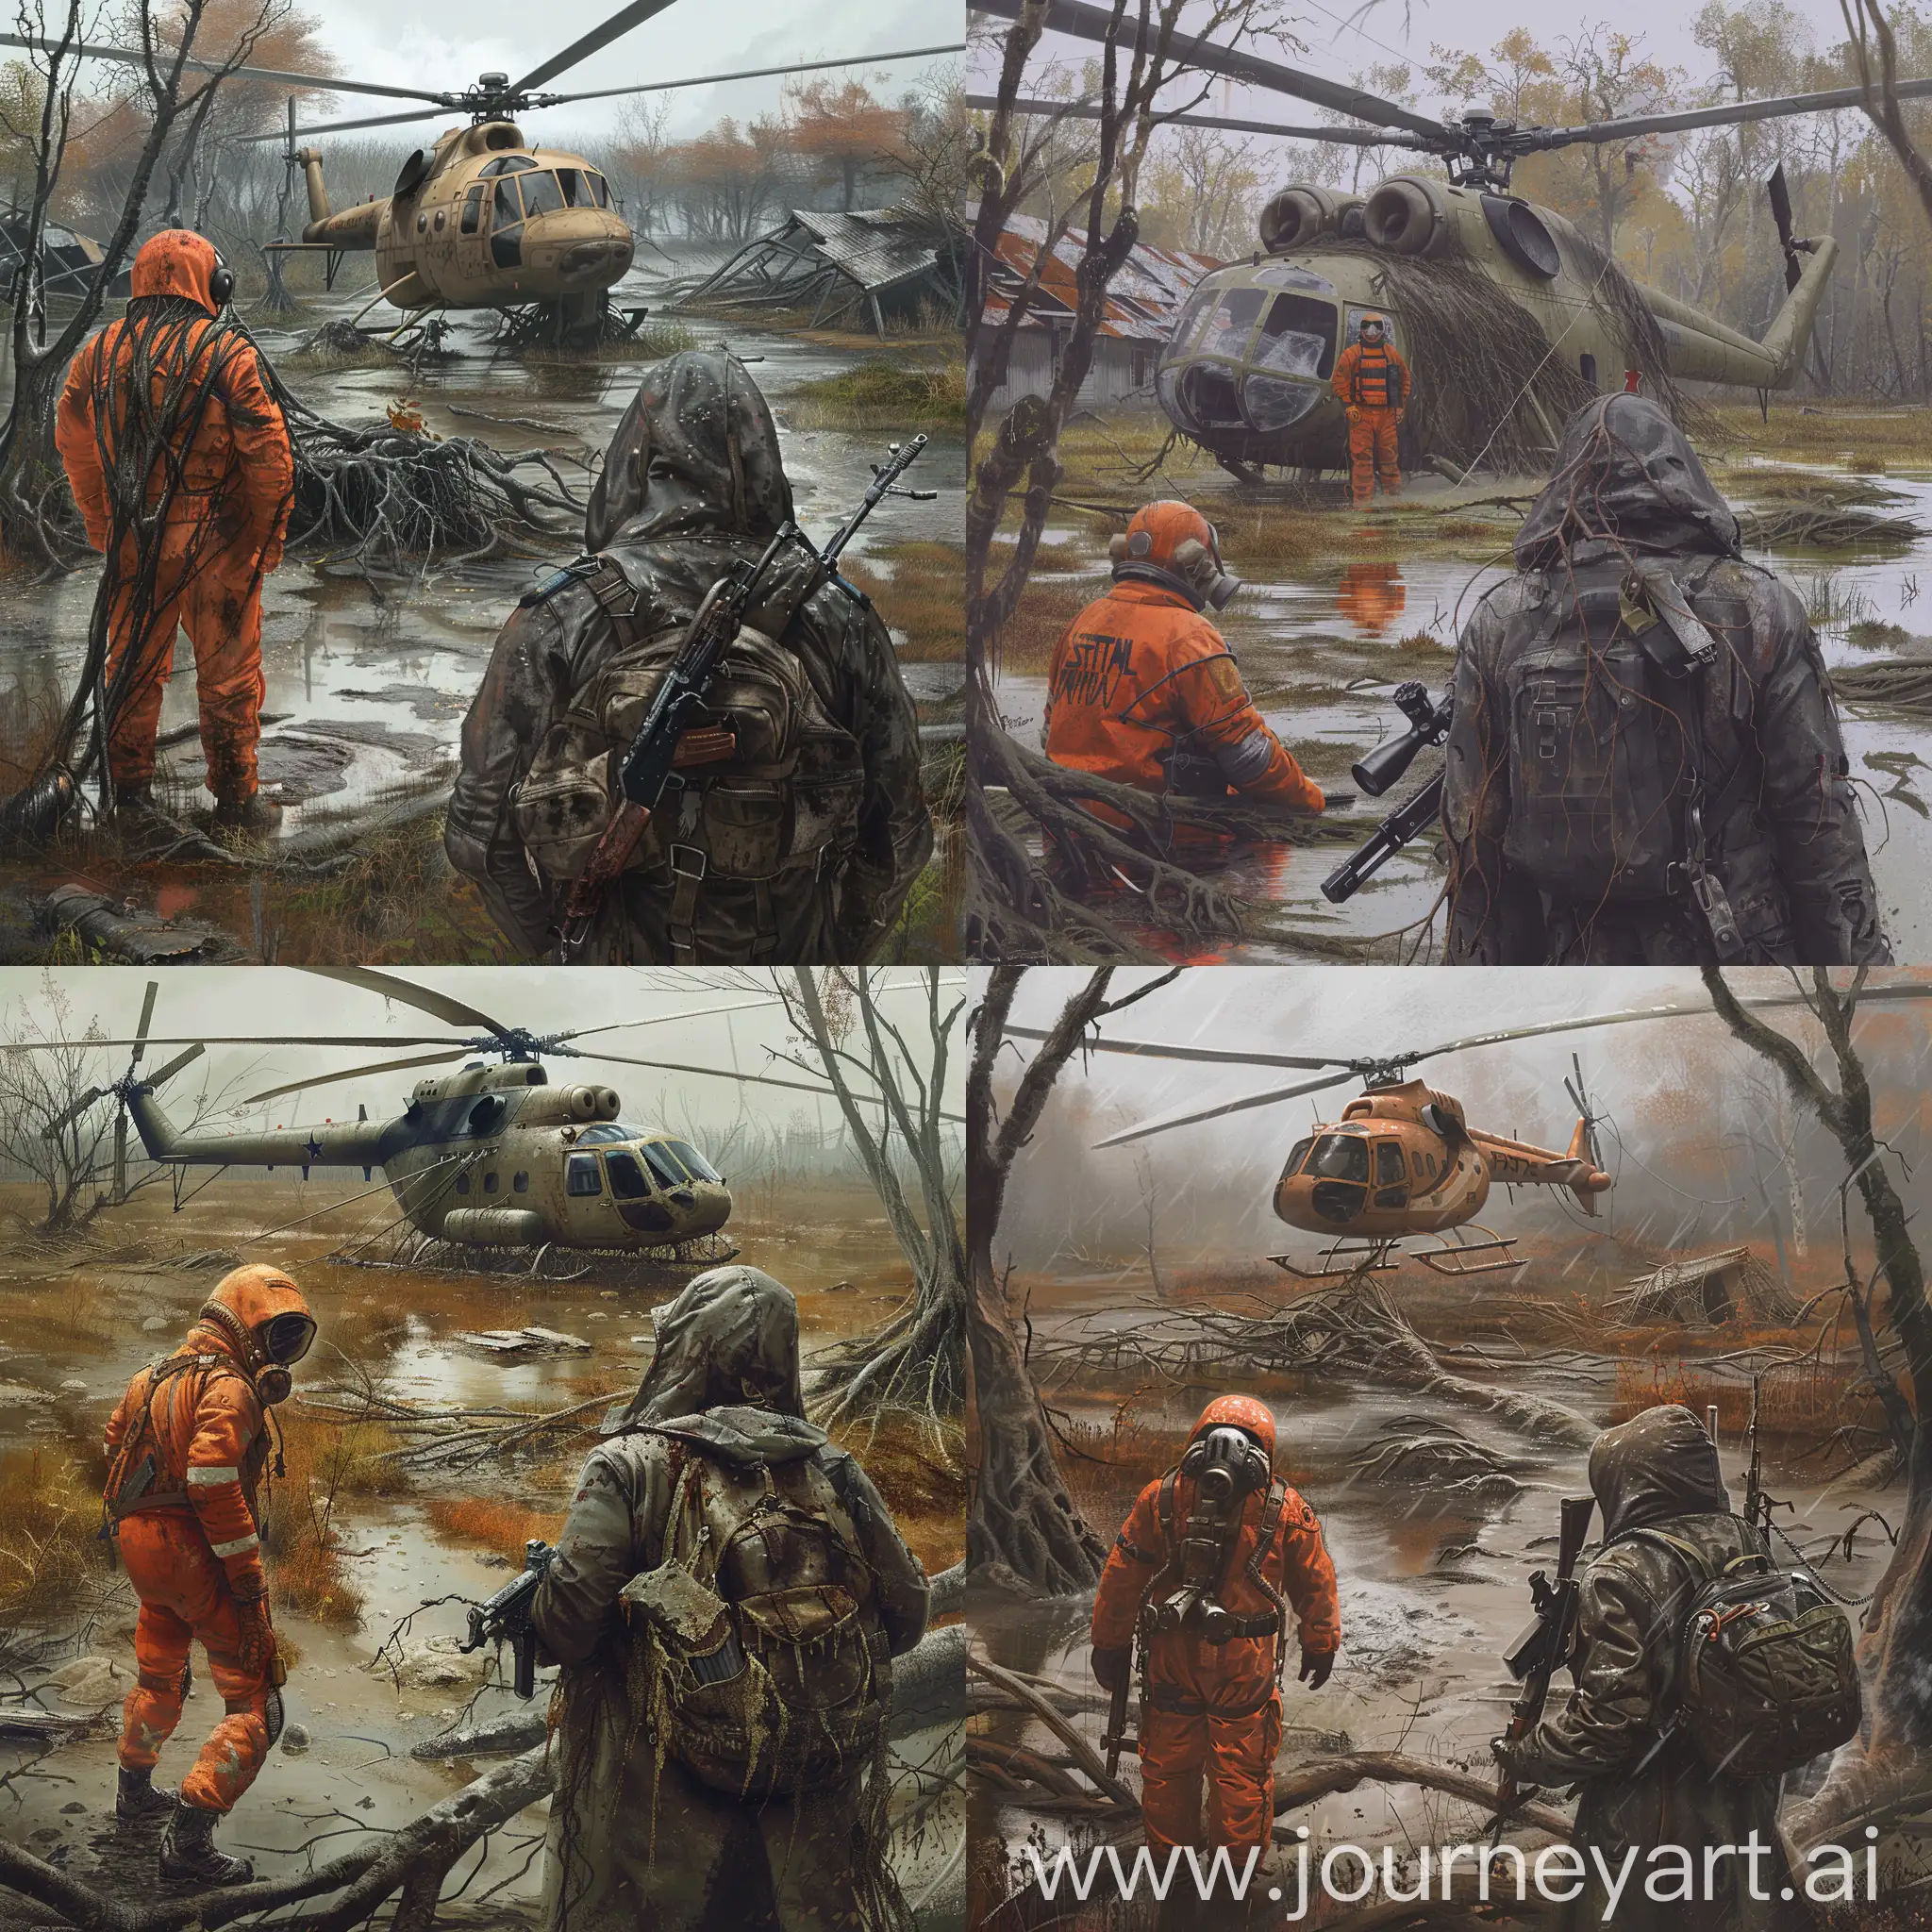 STALKER-Art-Abandoned-Chernobyl-Swamp-Encounter-with-Soviet-Space-Suit-and-Stalker